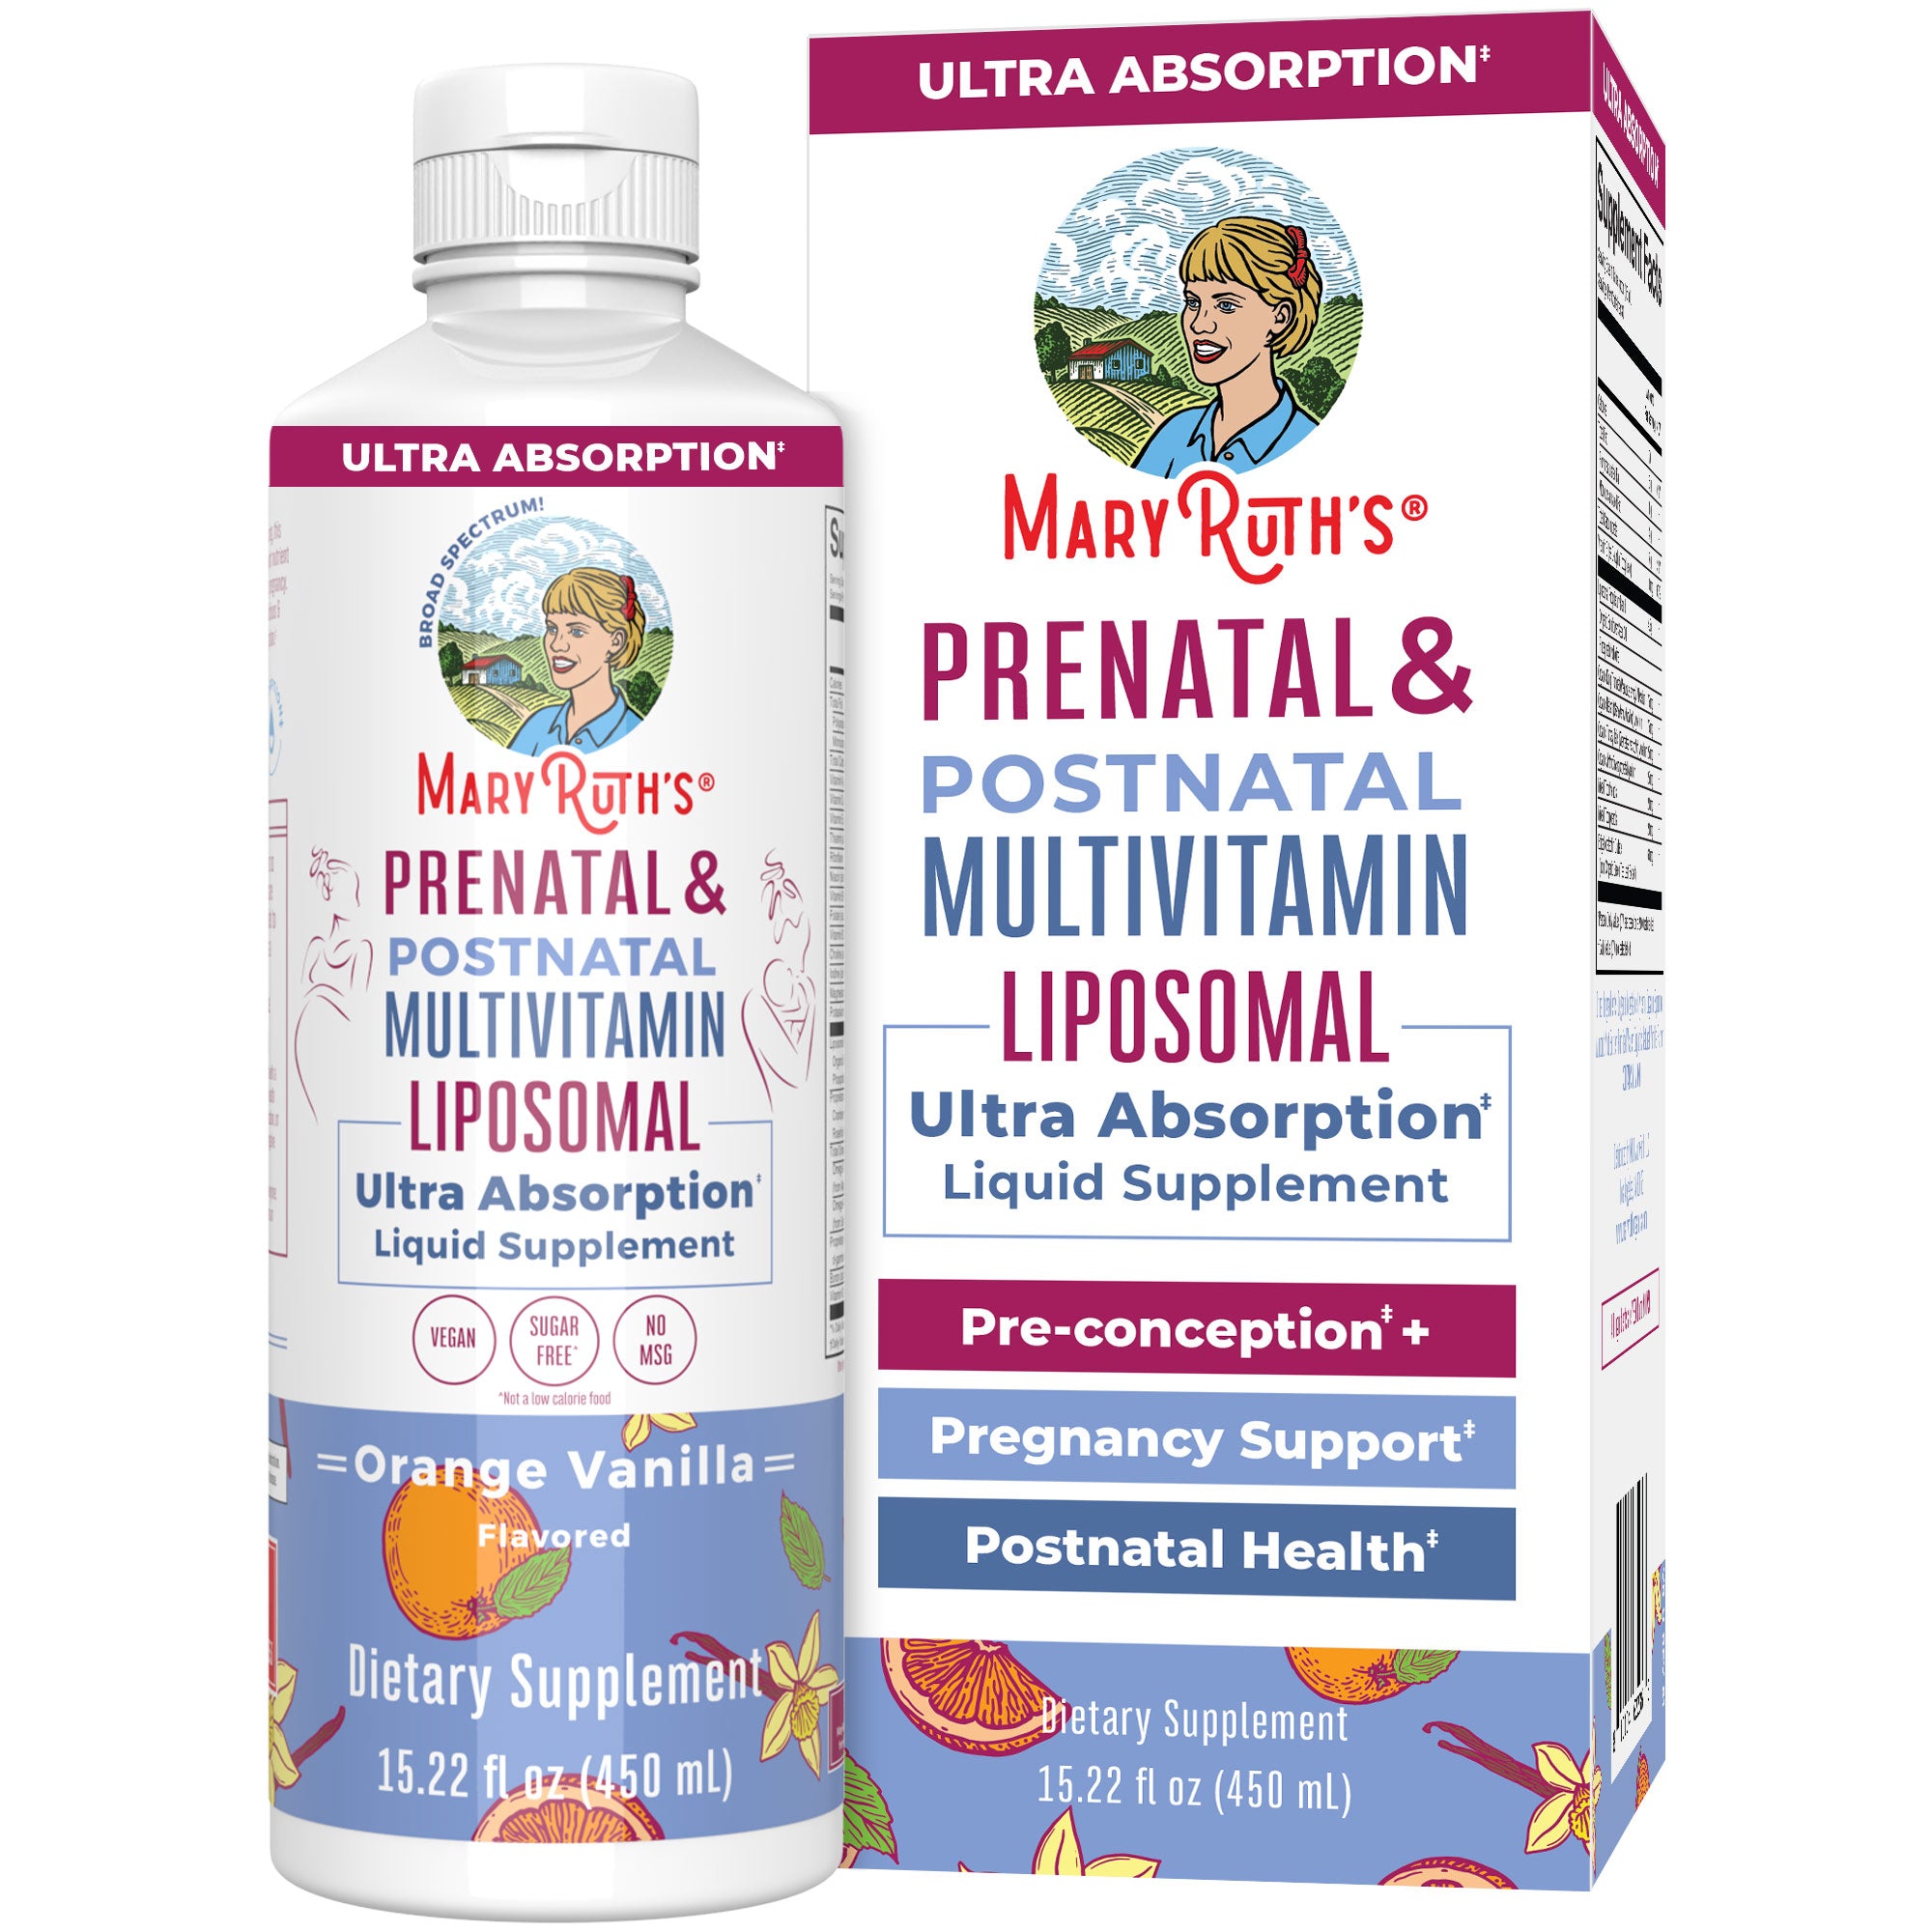 Prenatal & Postnatal Multivitamin Liposomal